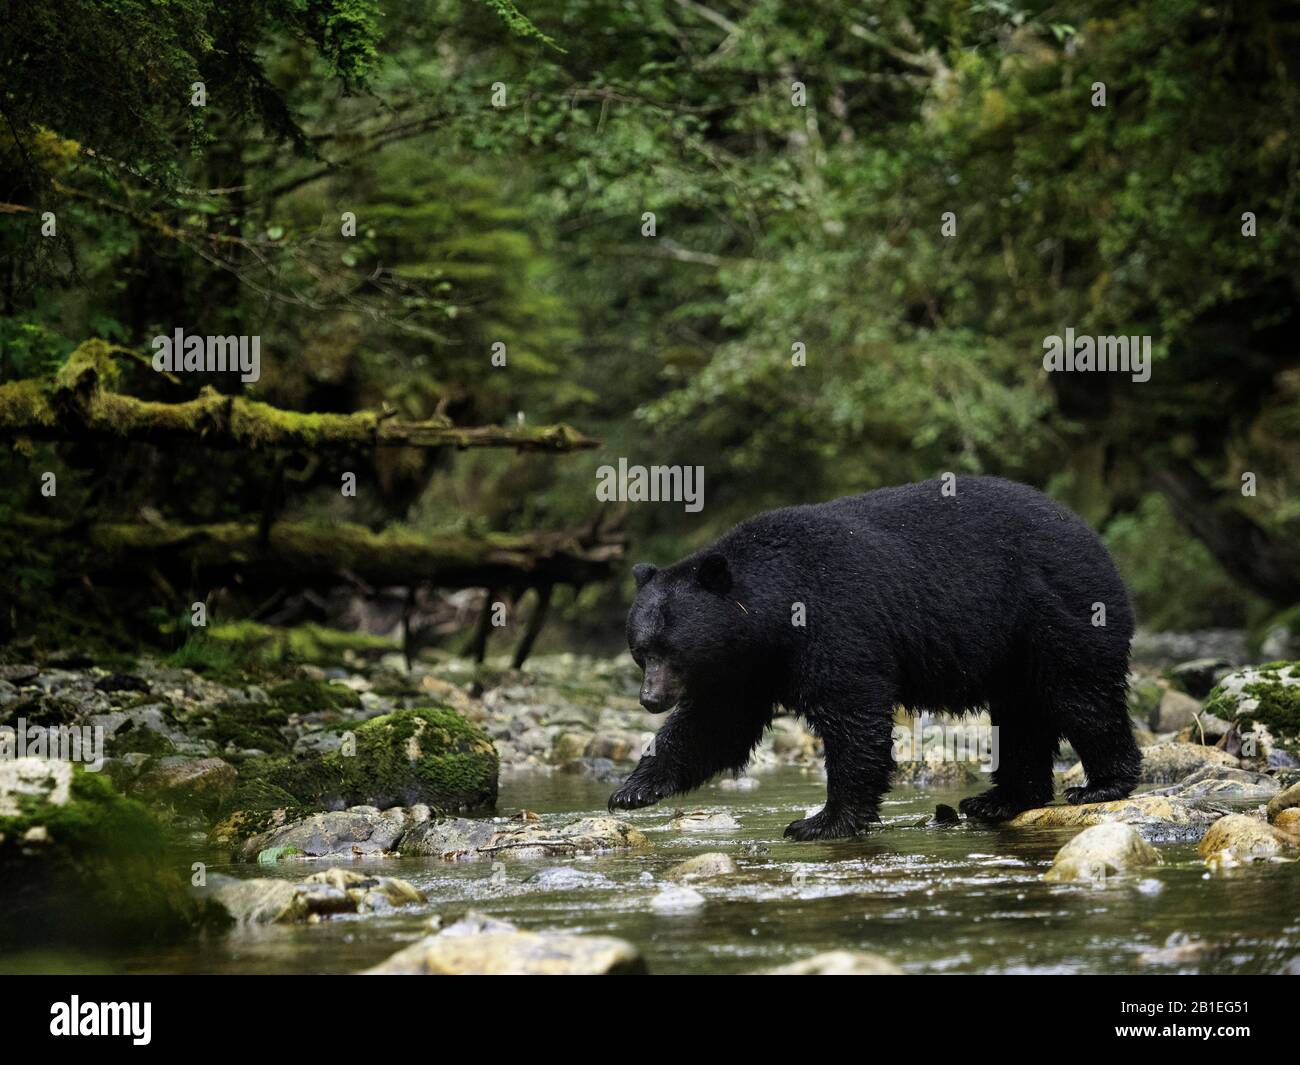 A Black Bear (Ursus americanus) crosses the river in British Columbia, Canada. Stock Photo